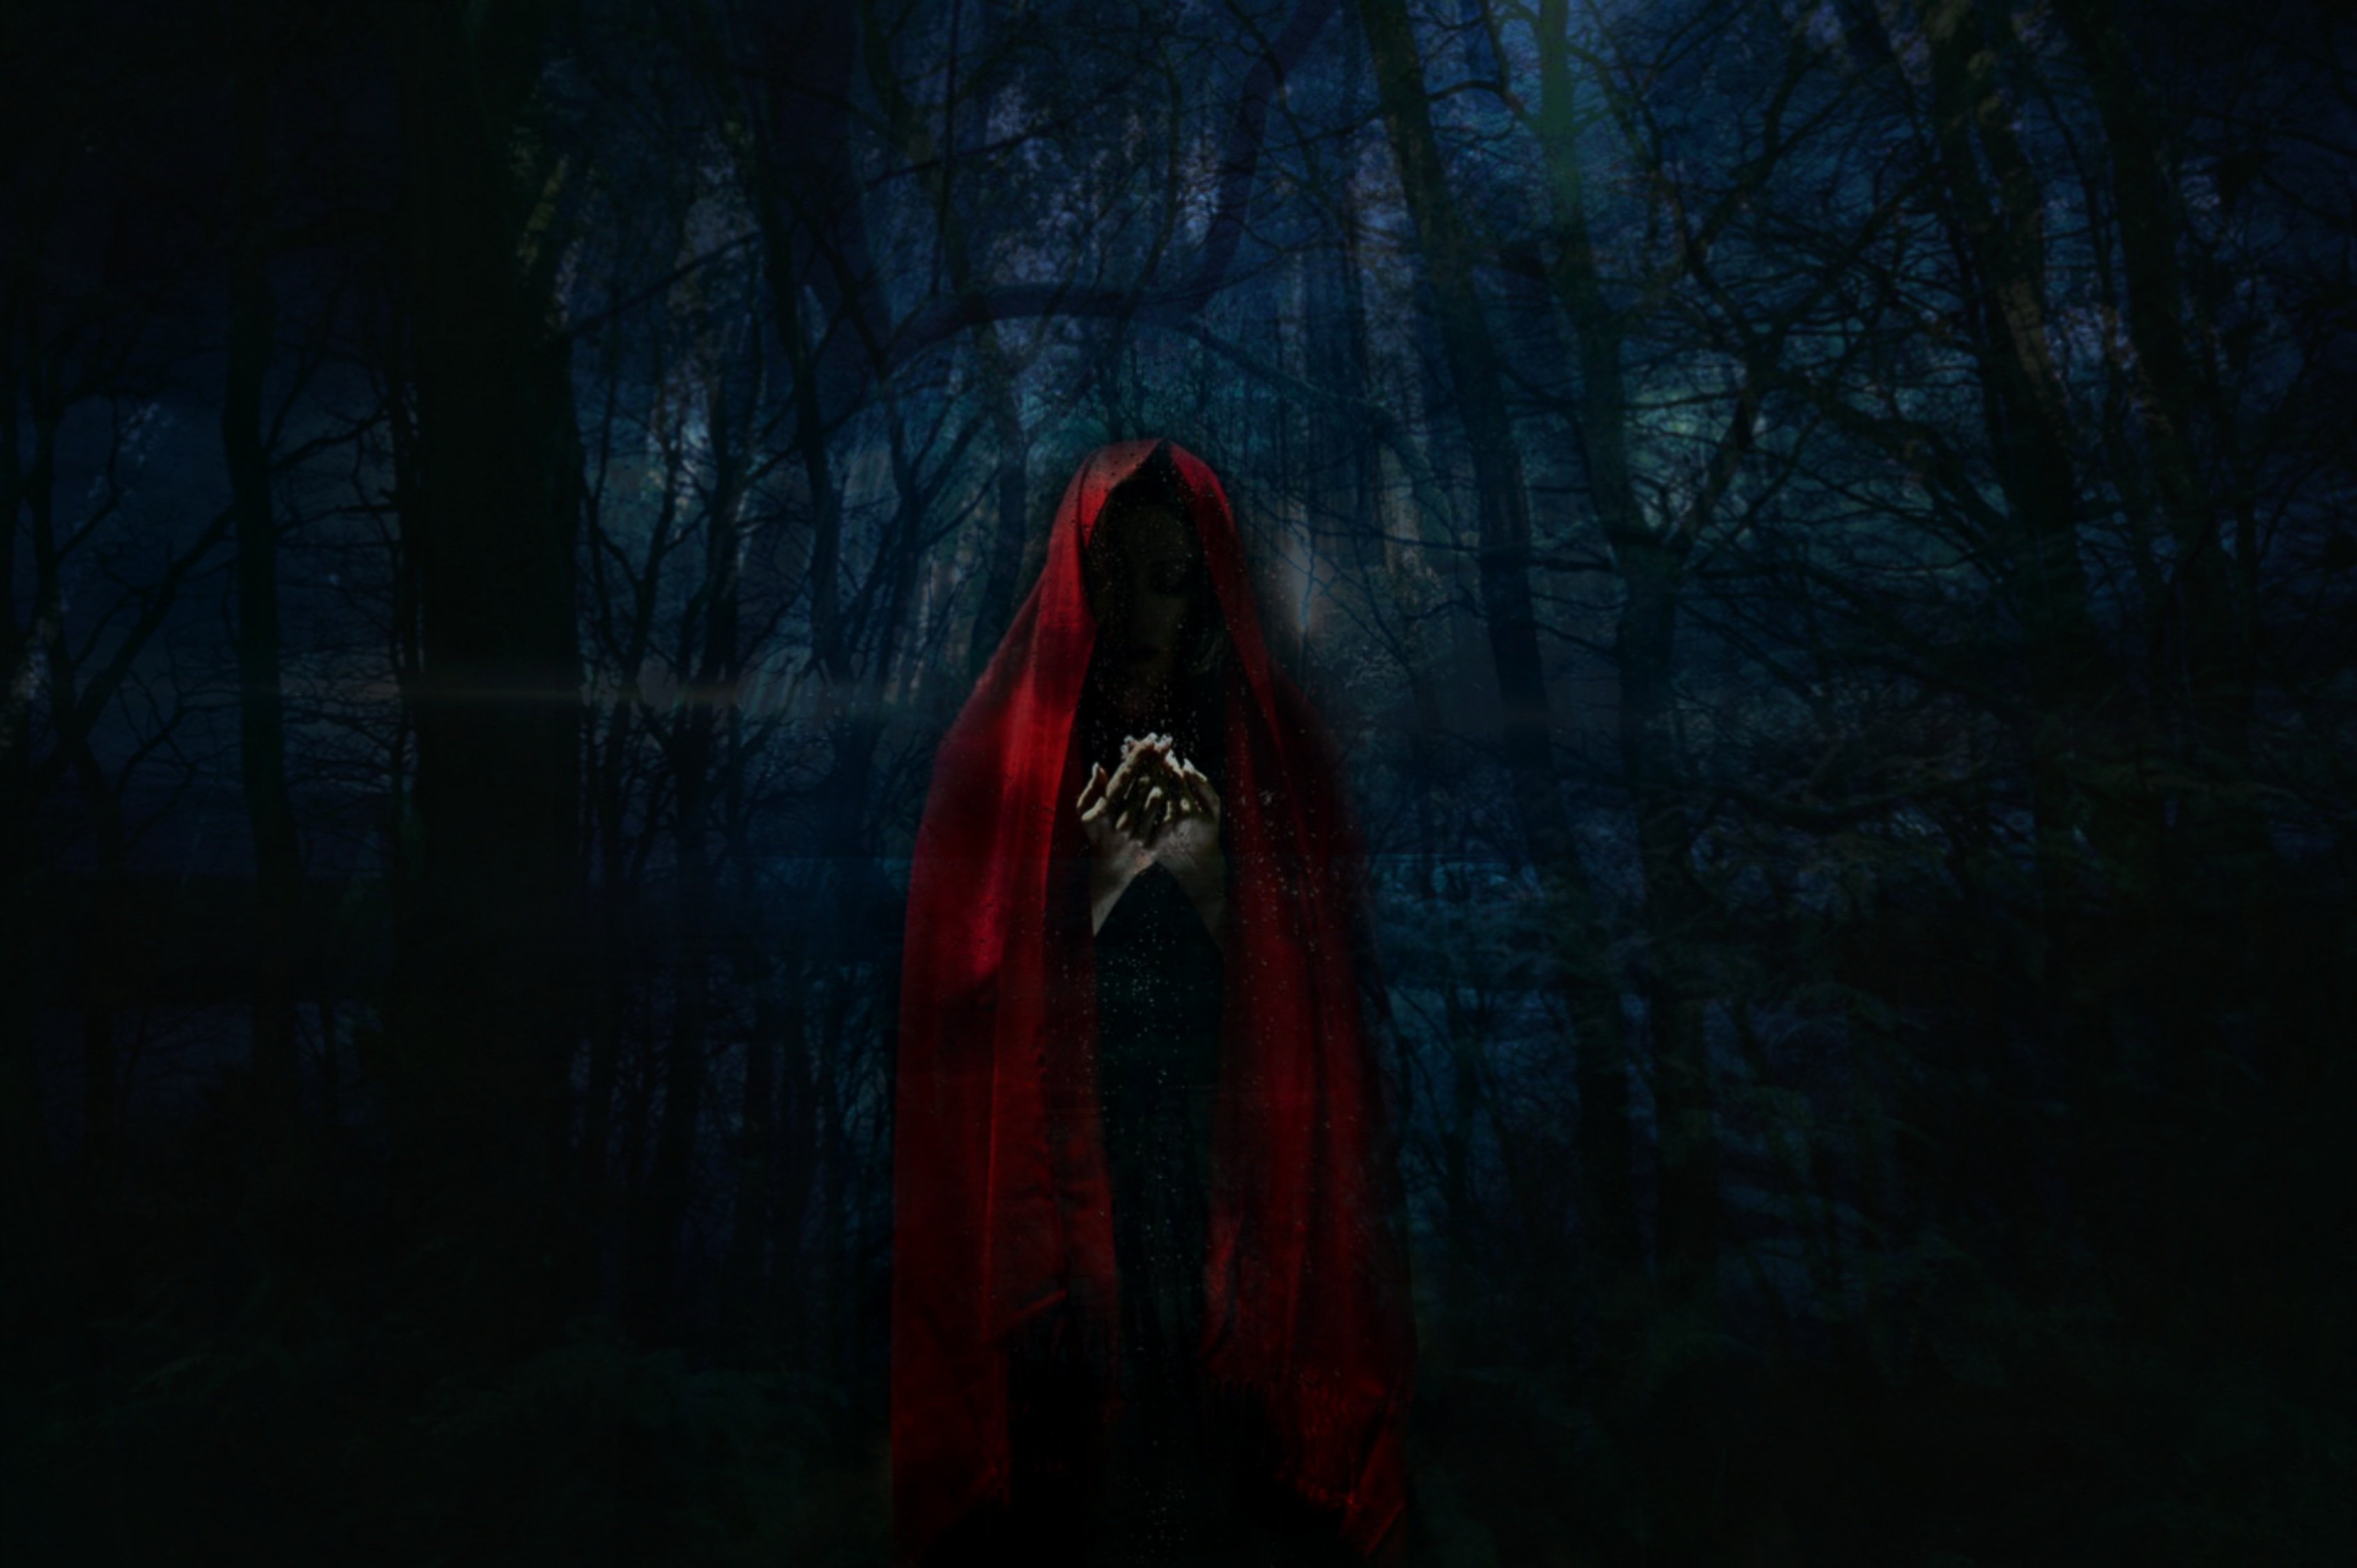 art, gloomy, female, woman, forest, spooky, eerie, mantle Phone Background